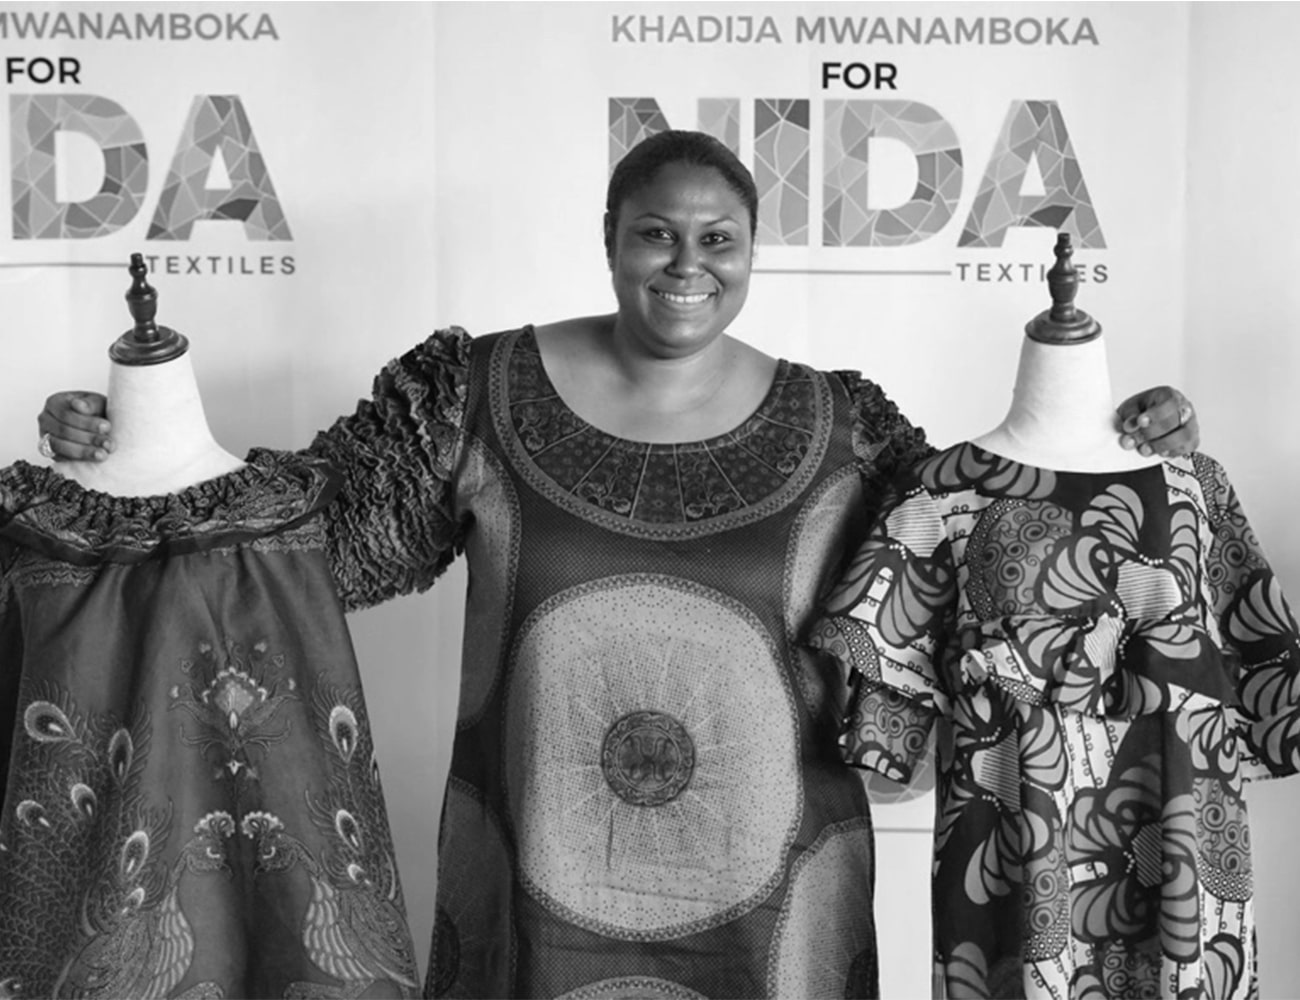 A Tanzanian Fashion Designer Showing her Work